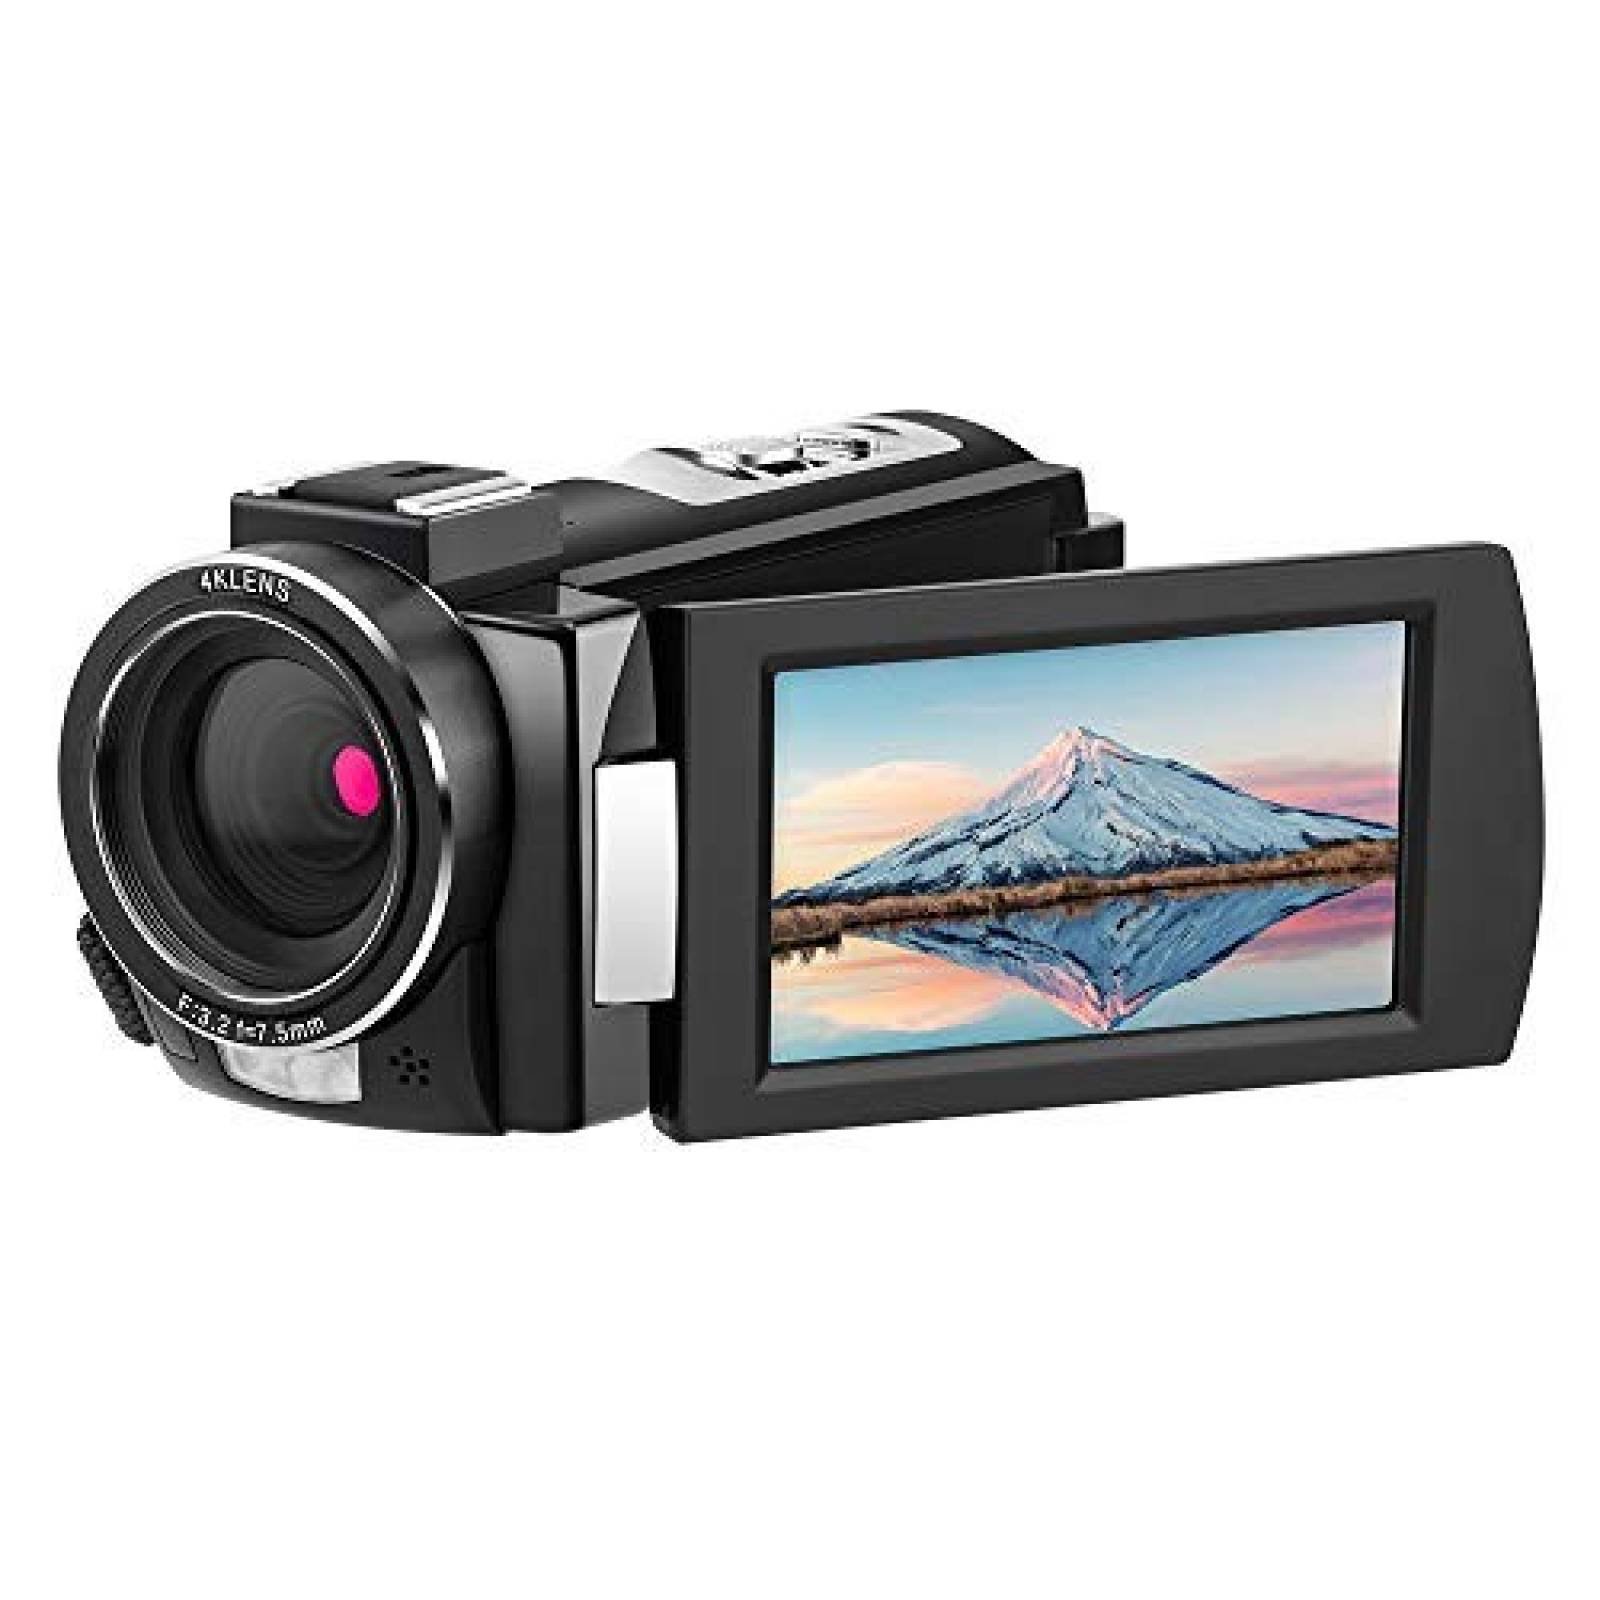 Video cámara ORDRO HDR-AE8 Full HD 1080P 60FPS -Negro